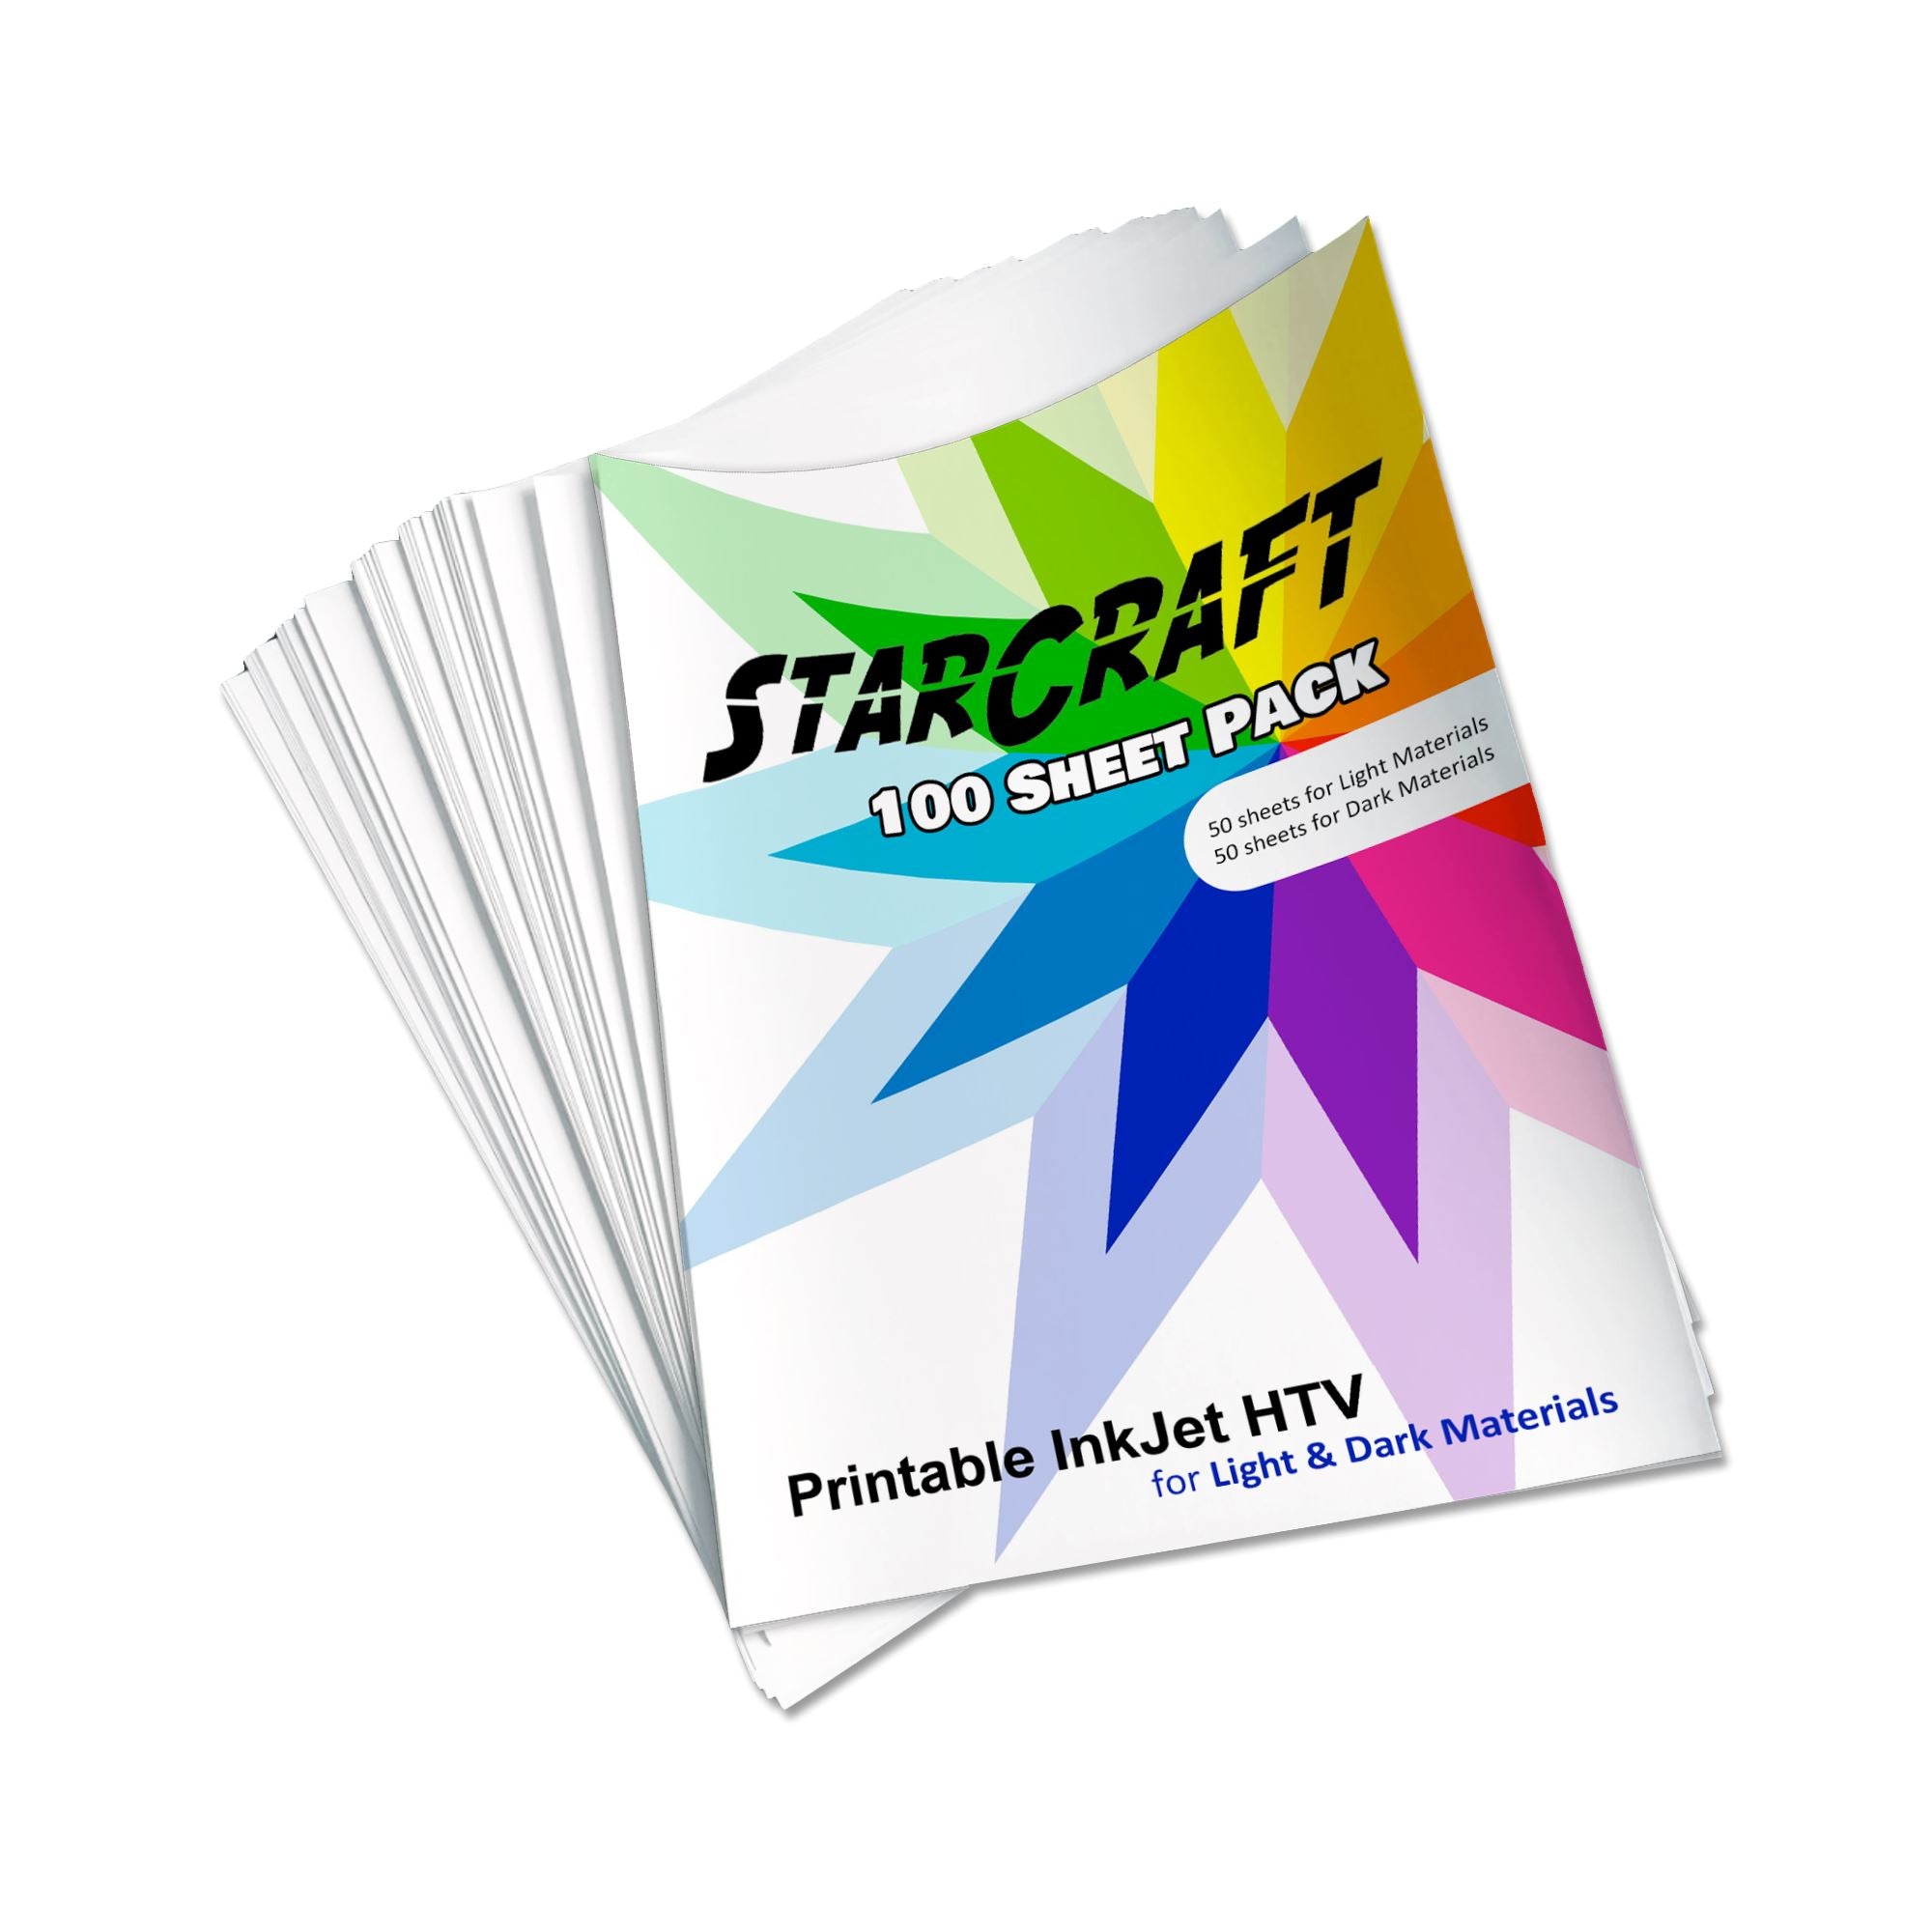 StarCraft Inkjet Printable Matte Permanent Adhesive Vinyl 10-Pack